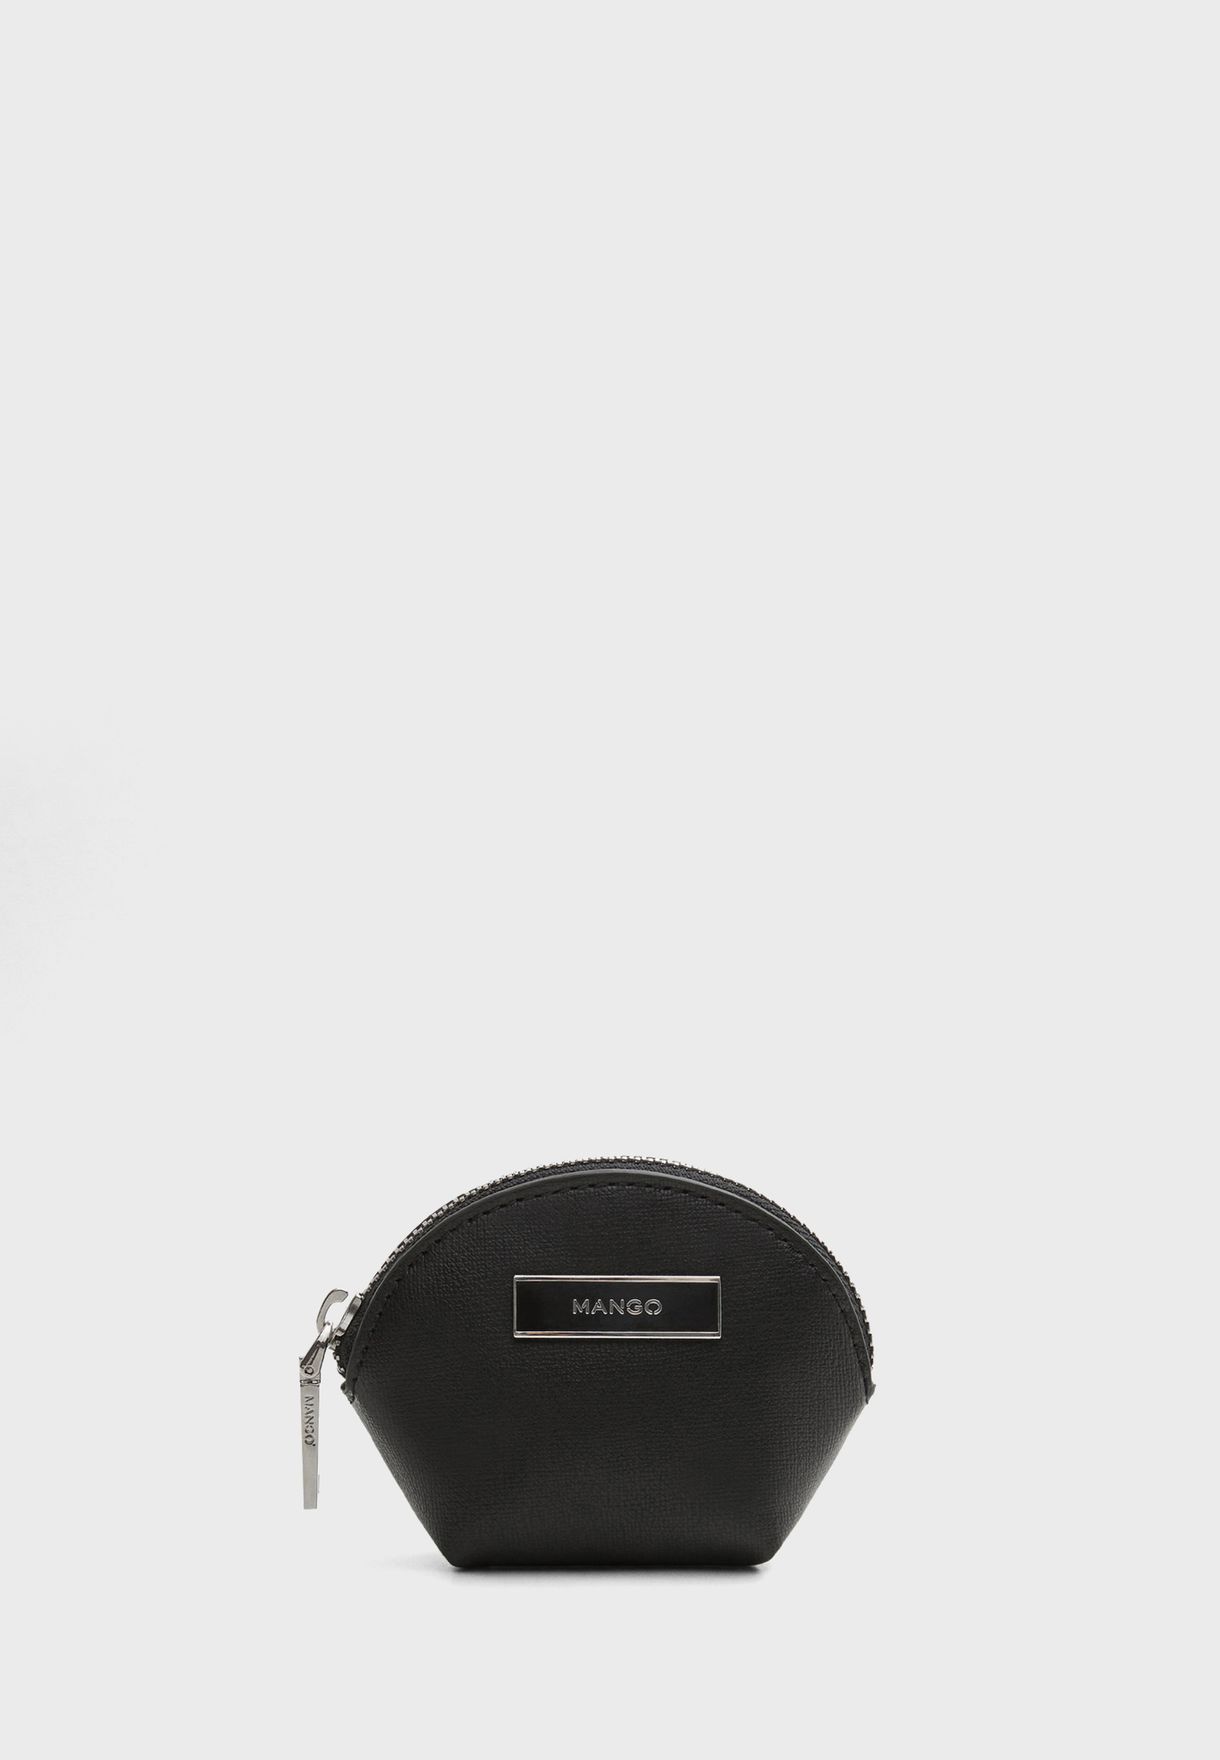 mango black purse